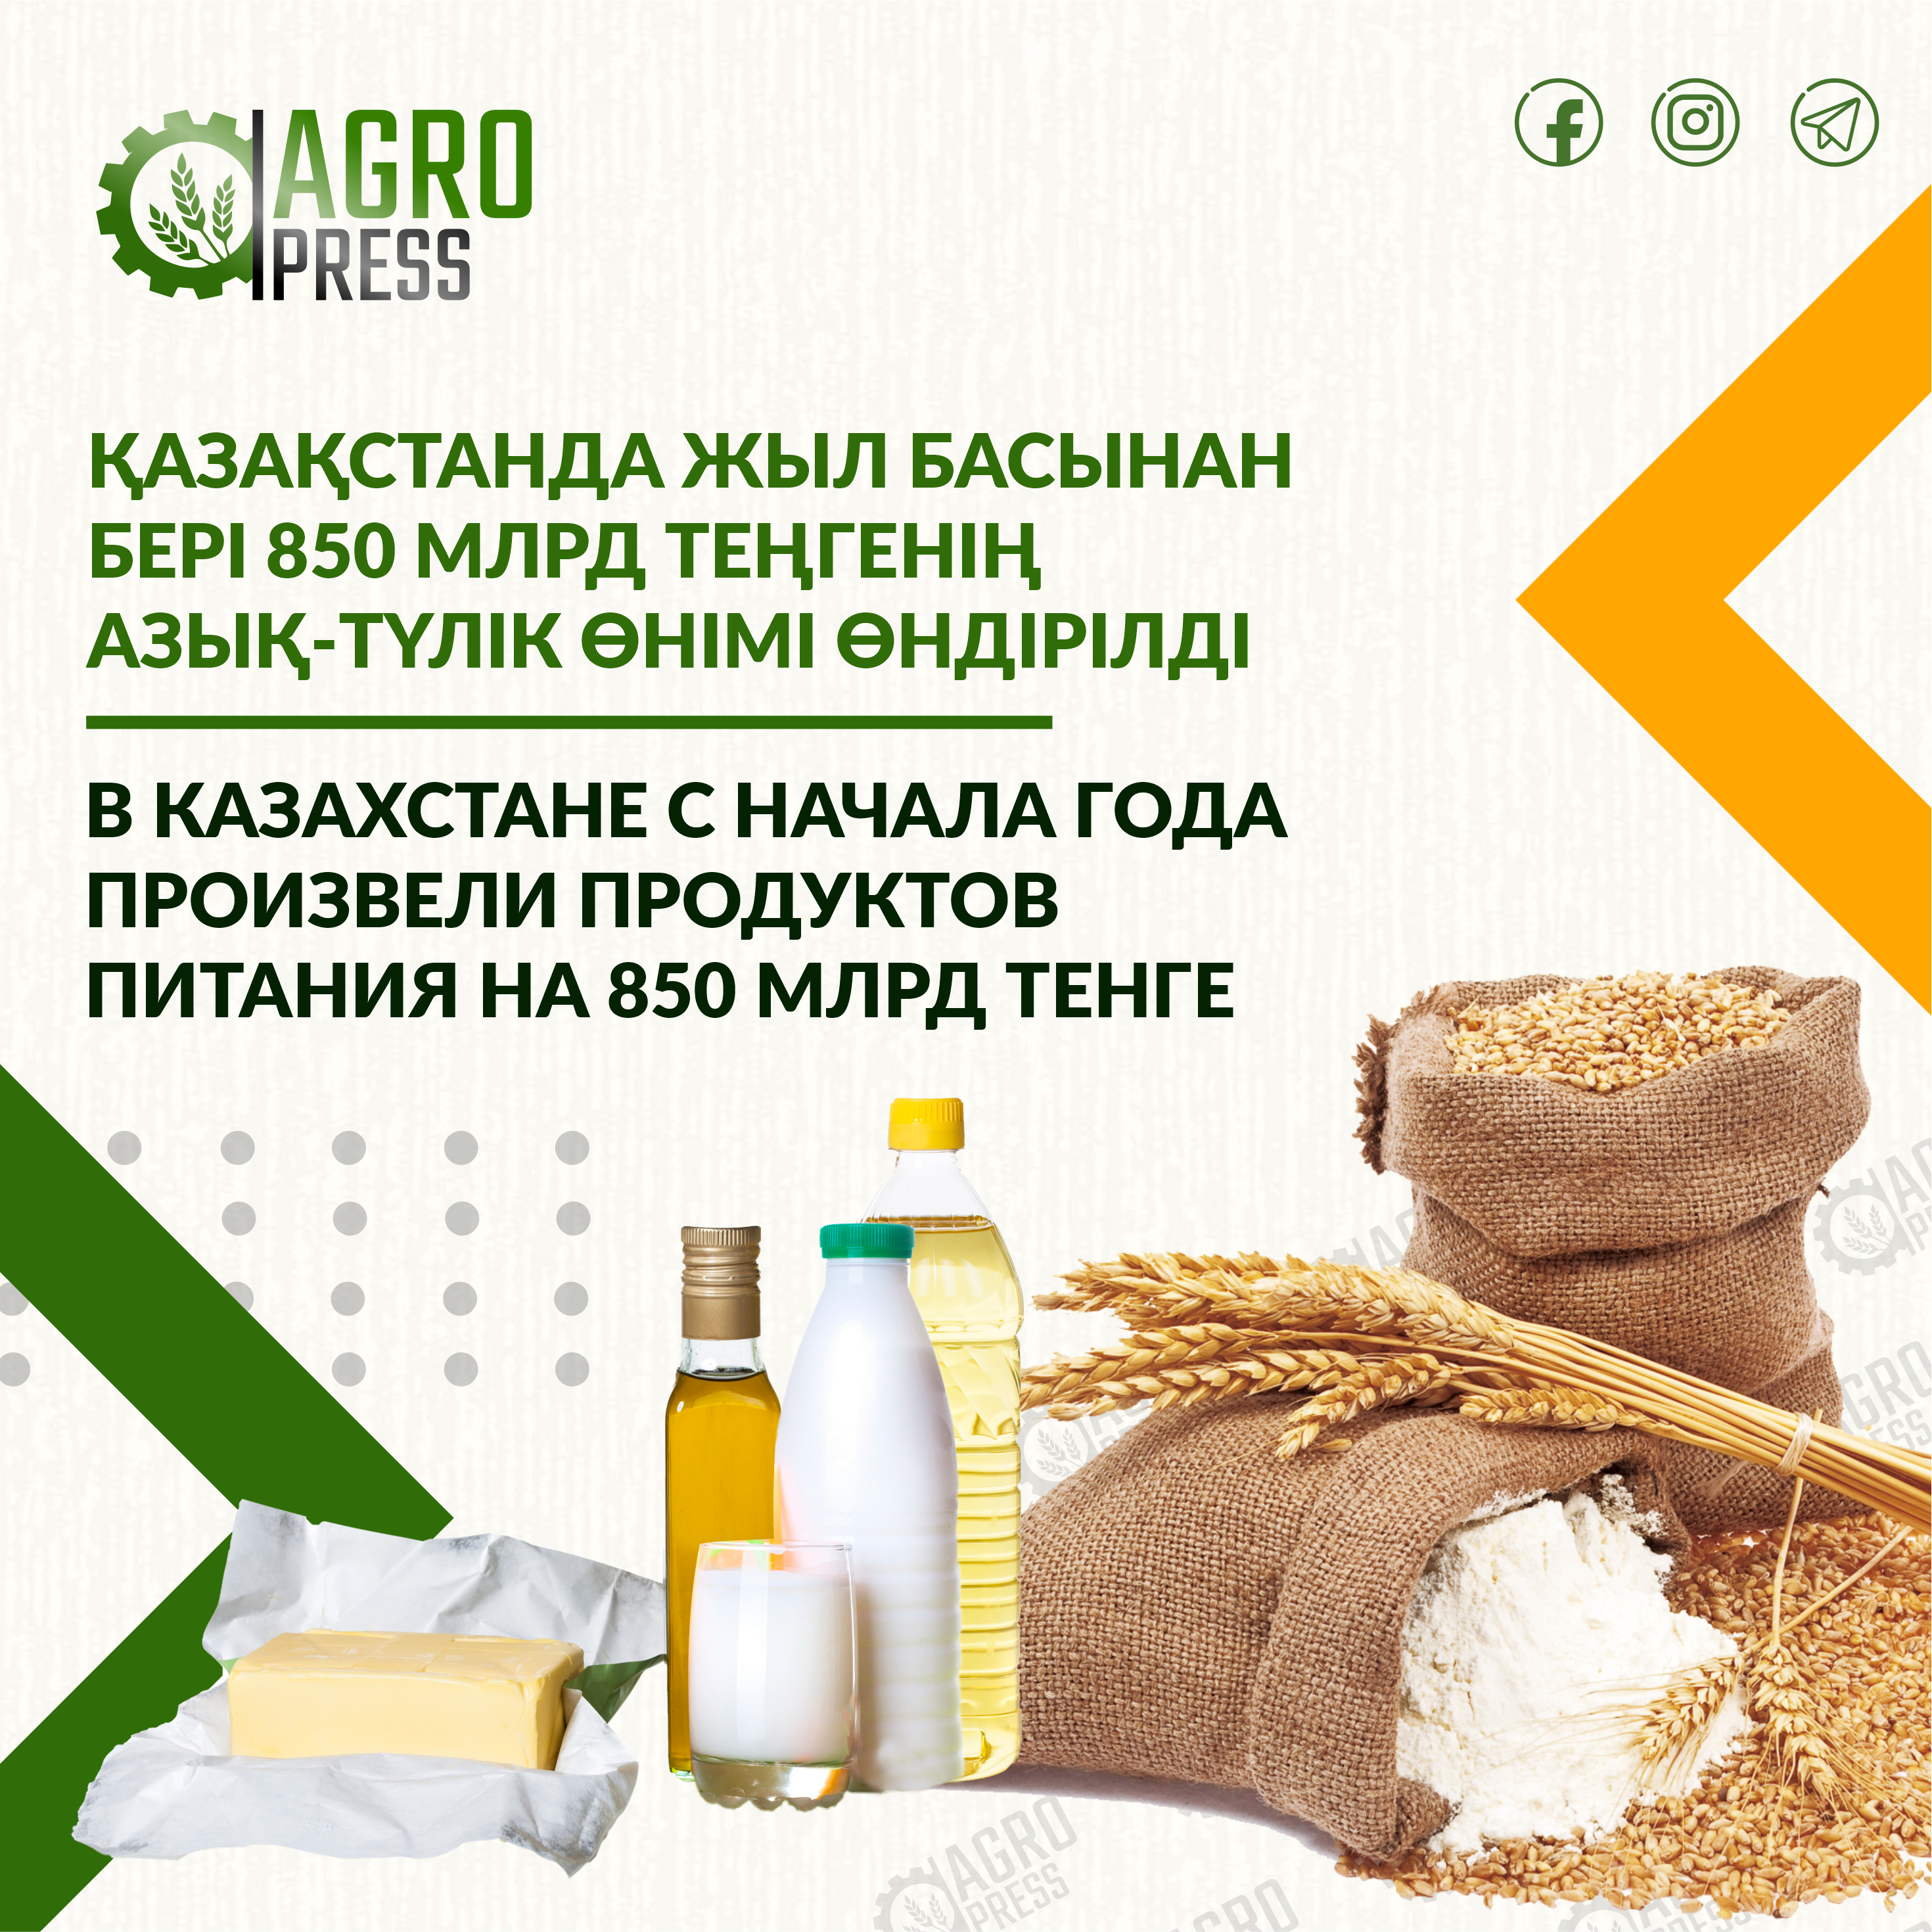 В Казахстане с начала года произвели продуктов питания на 850 млрд тенге